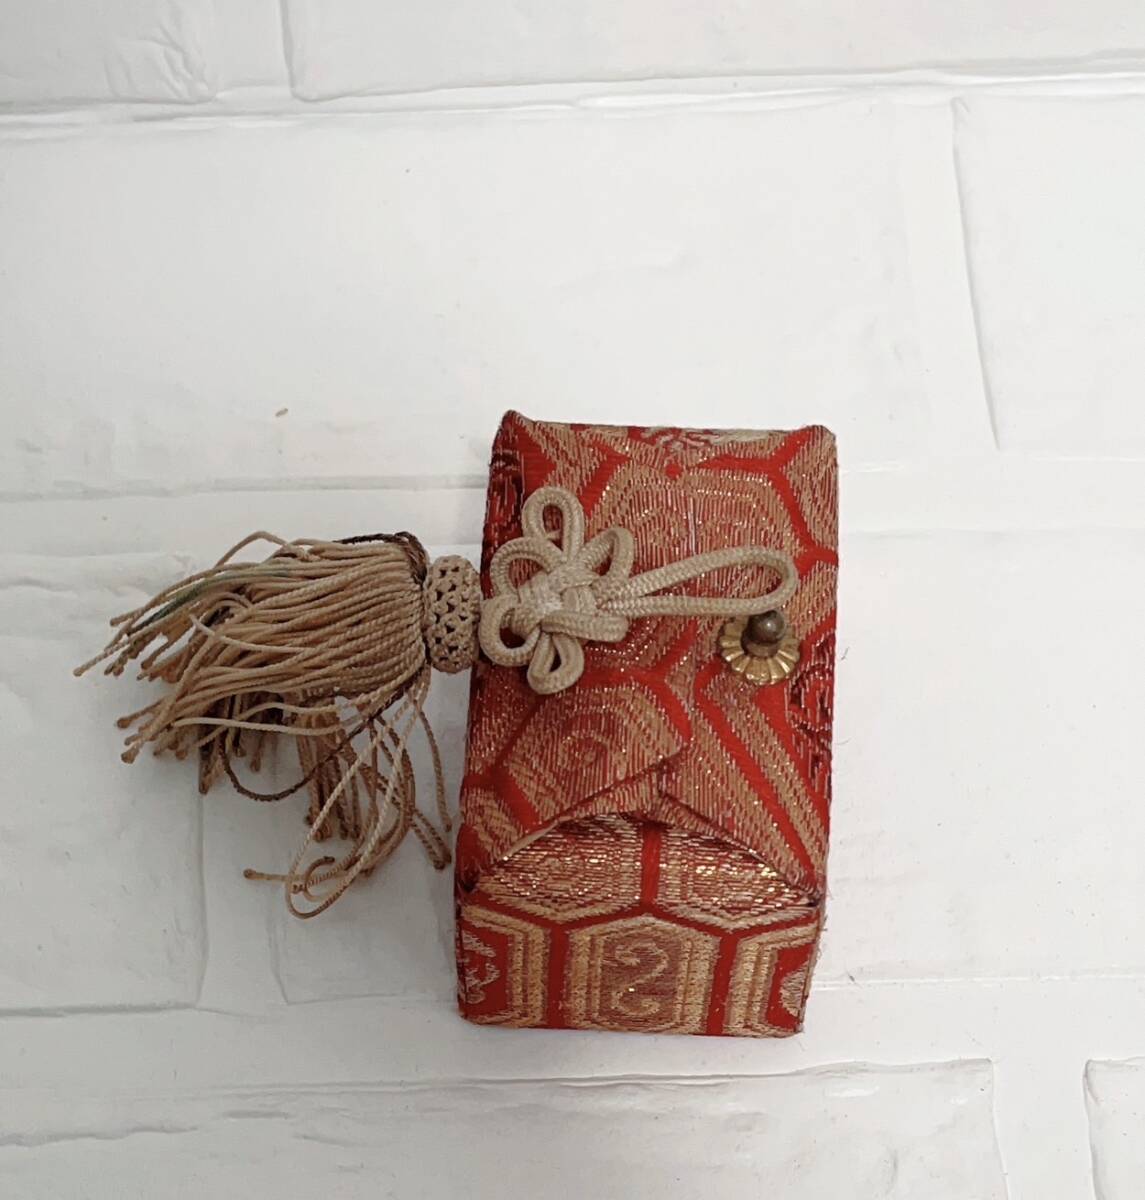 [7652 0514] koto pillar koto cat pair koto tool traditional Japanese musical instrument tree boxed secondhand goods 